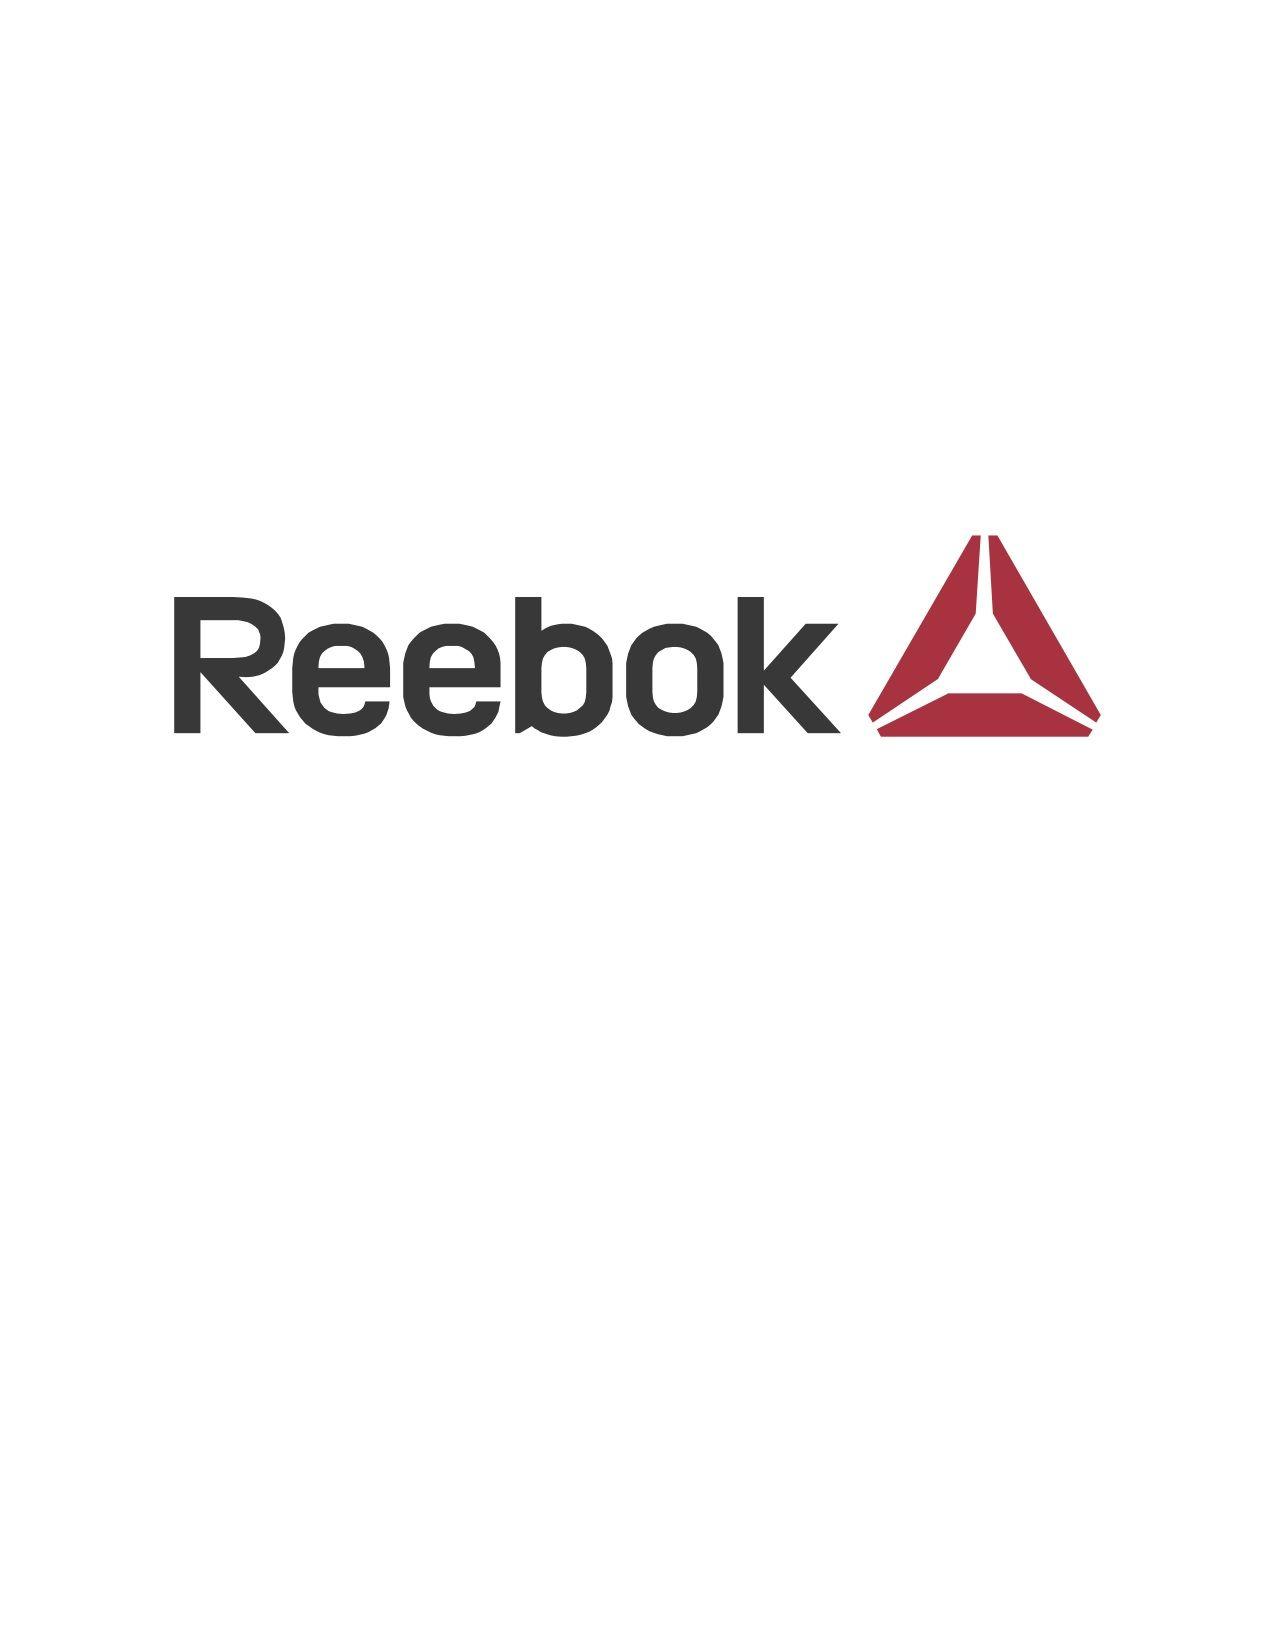 Reebok Logo Wallpapers Wallpaper Cave